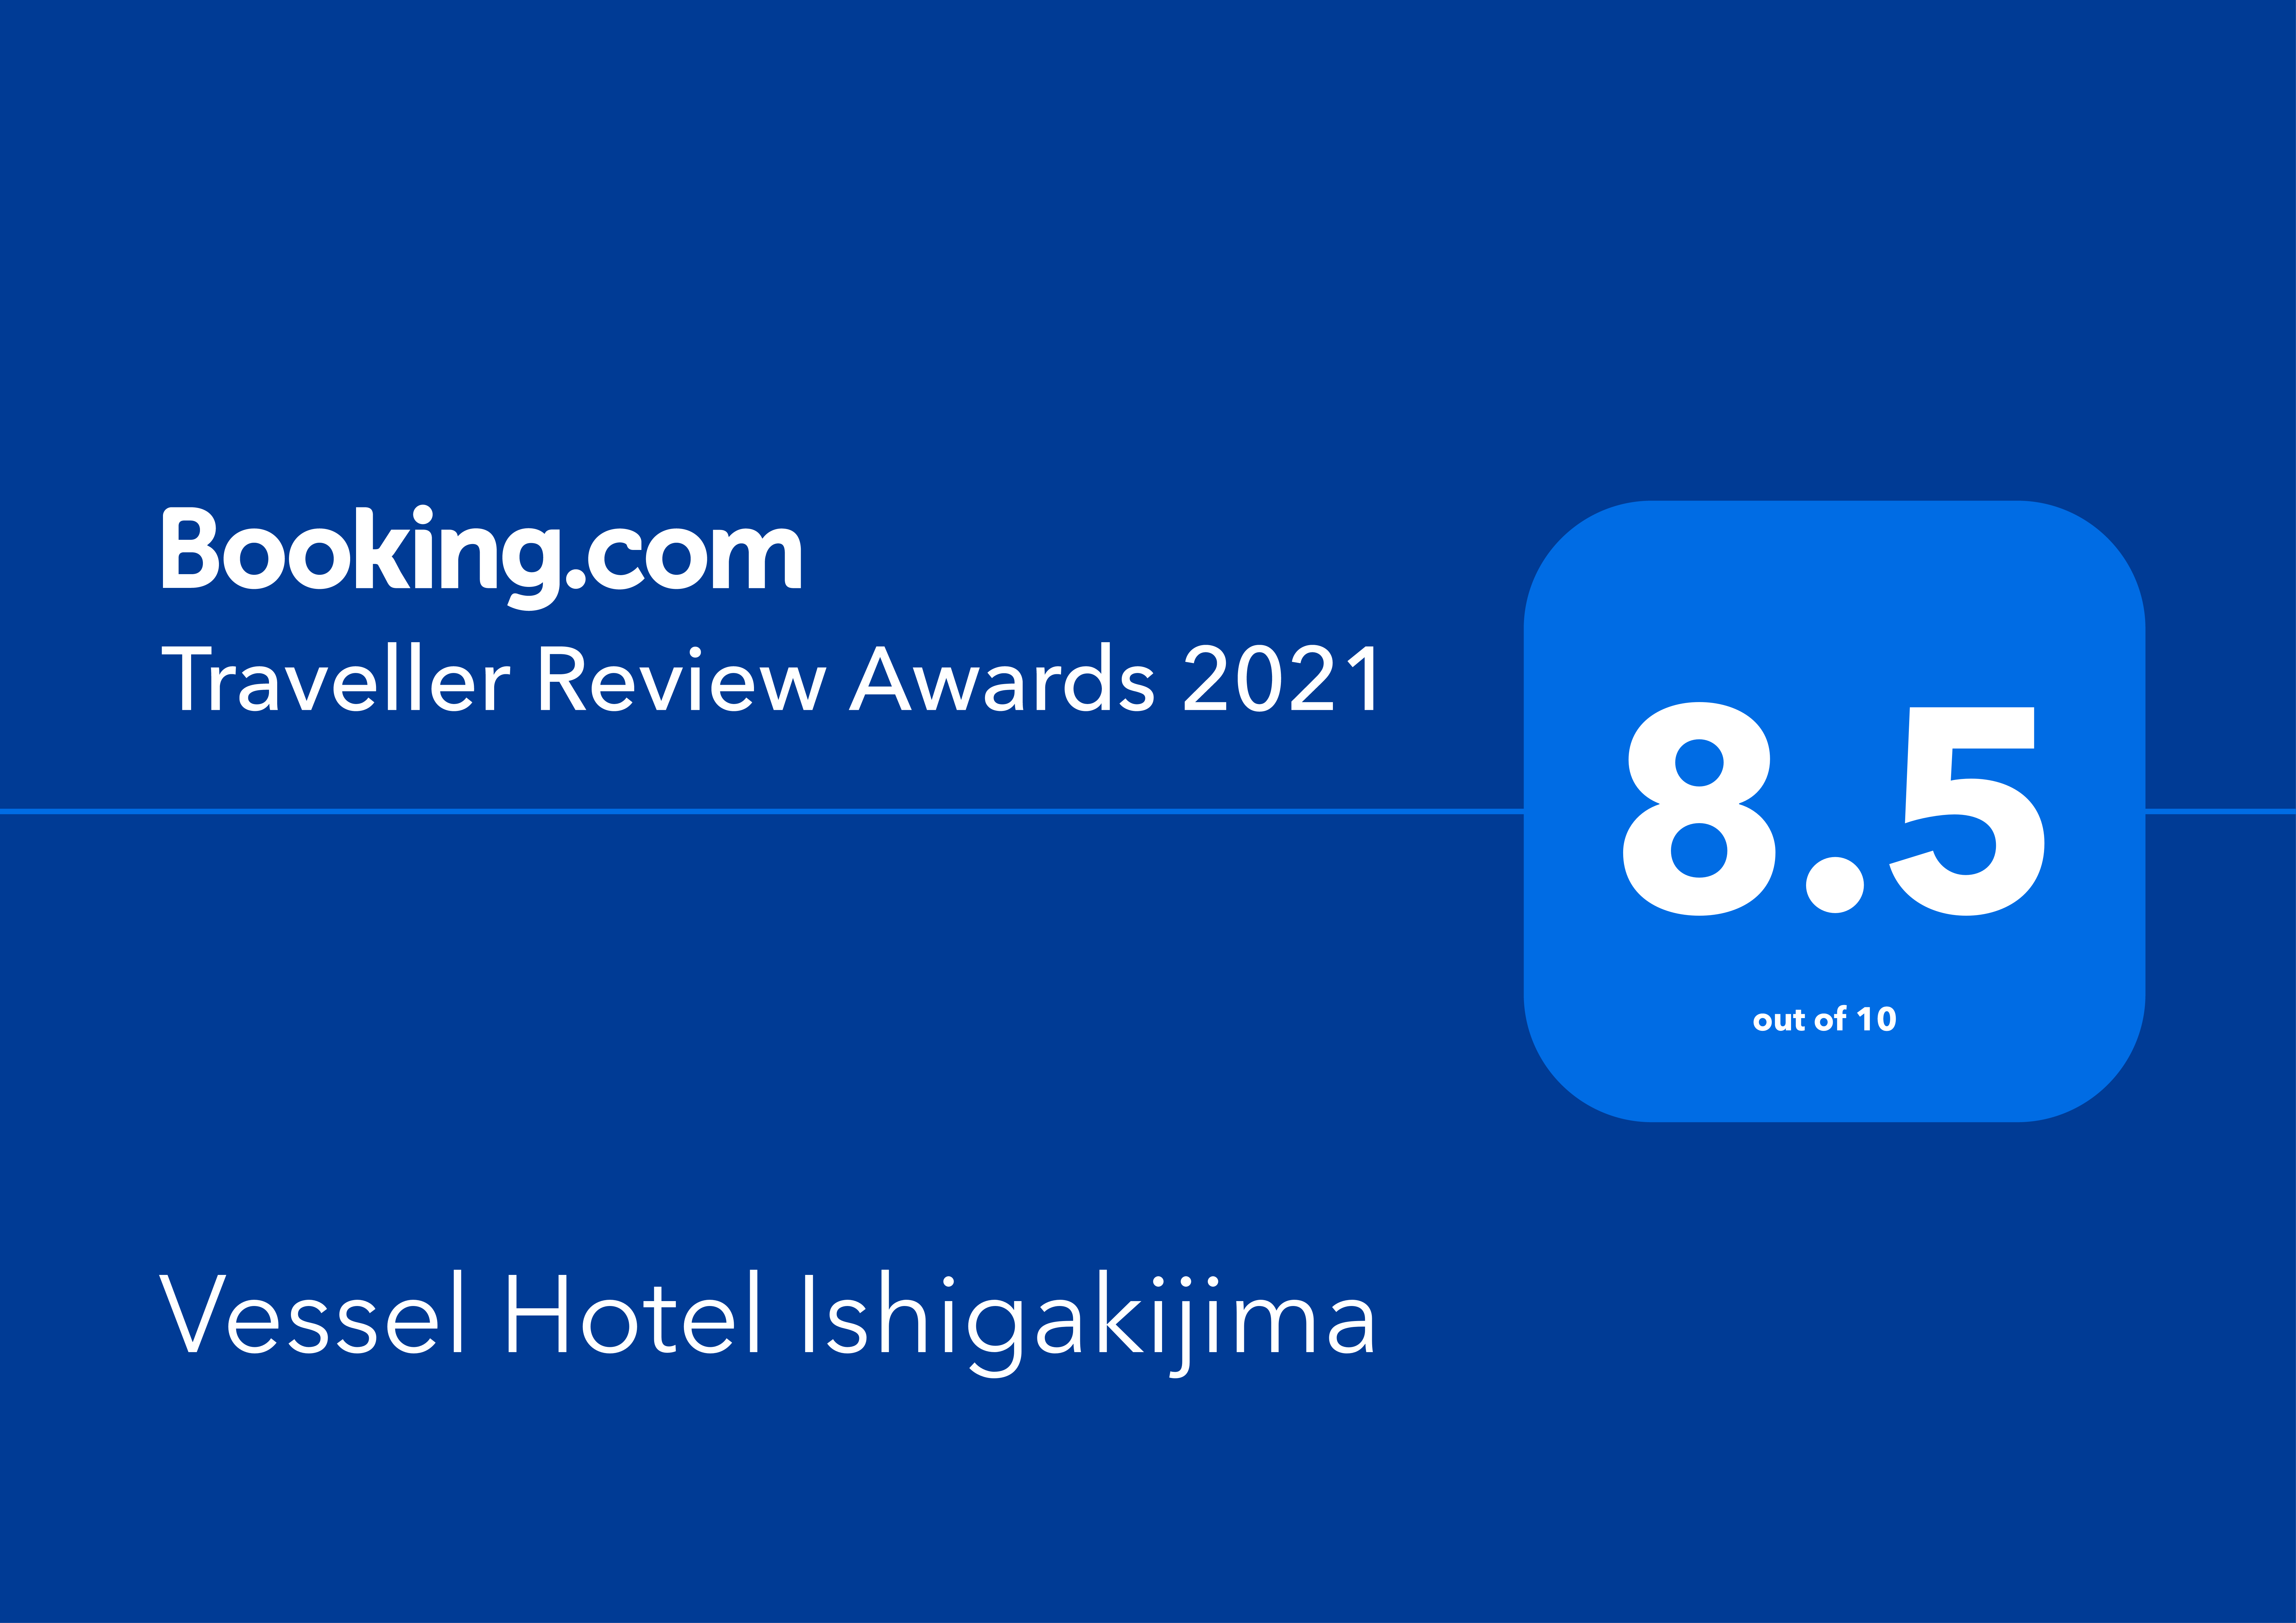 Winner of Booking.com &quot;Traveller Review Awards 2021&quot;